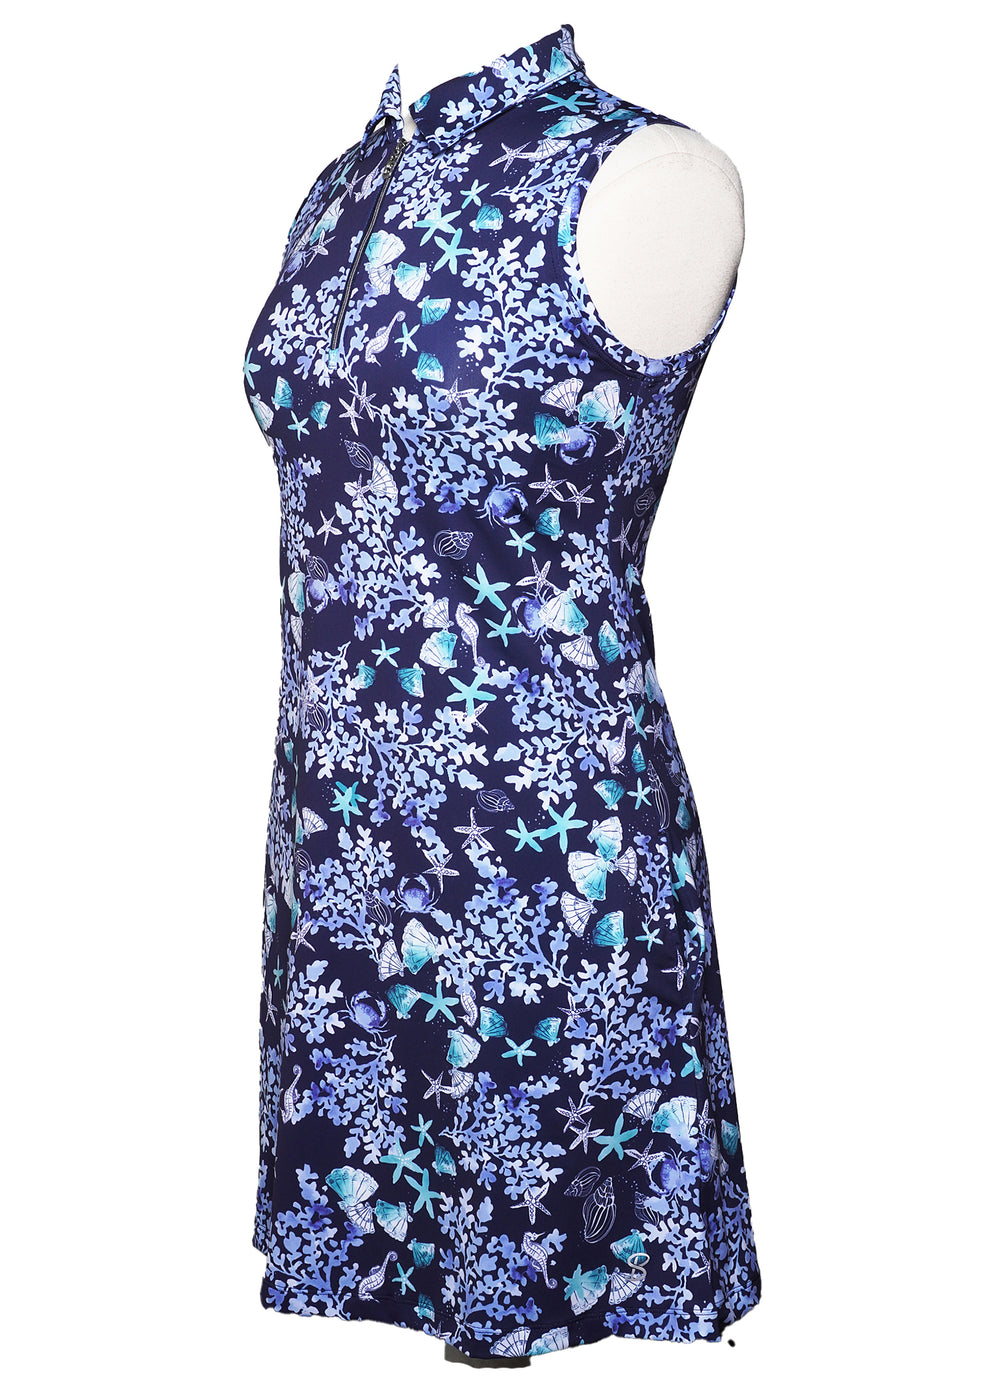 Sofibella Sleeveless Aqua Dress - Mar - Size Small - Skorzie